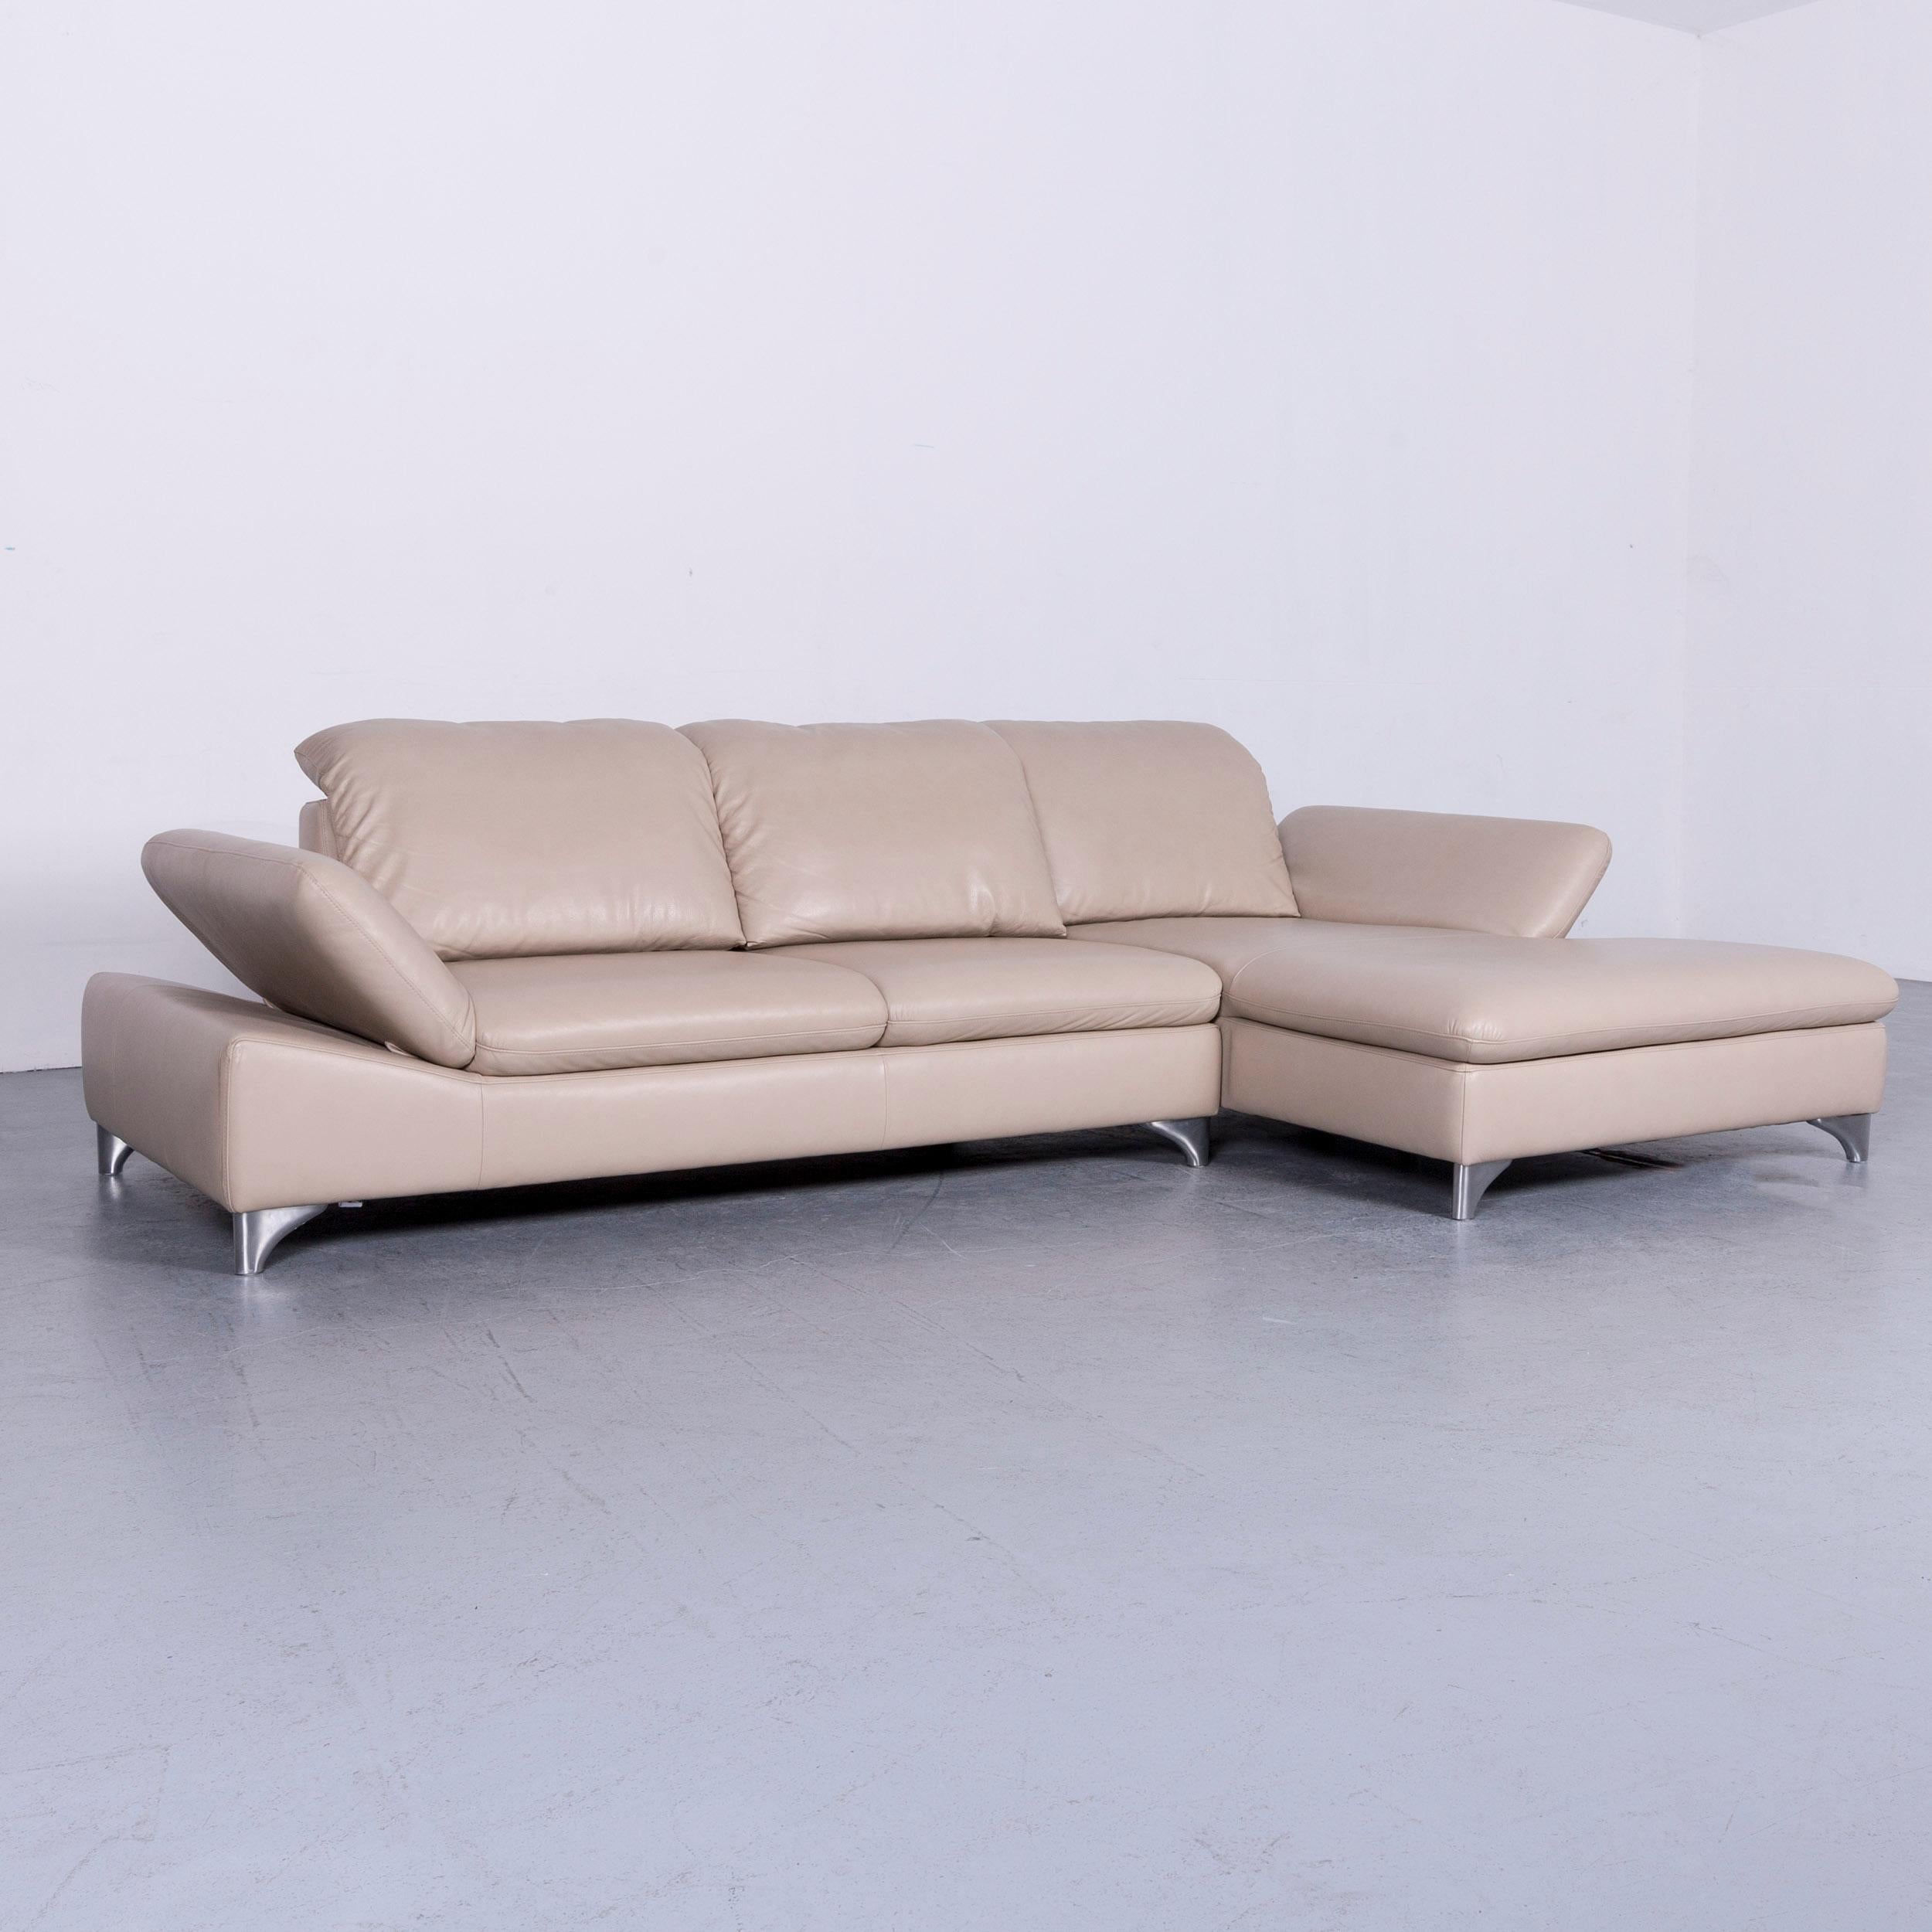 German Willi Schillig Enjoy Designer Leather Sofa Footstool Set Beige Modern